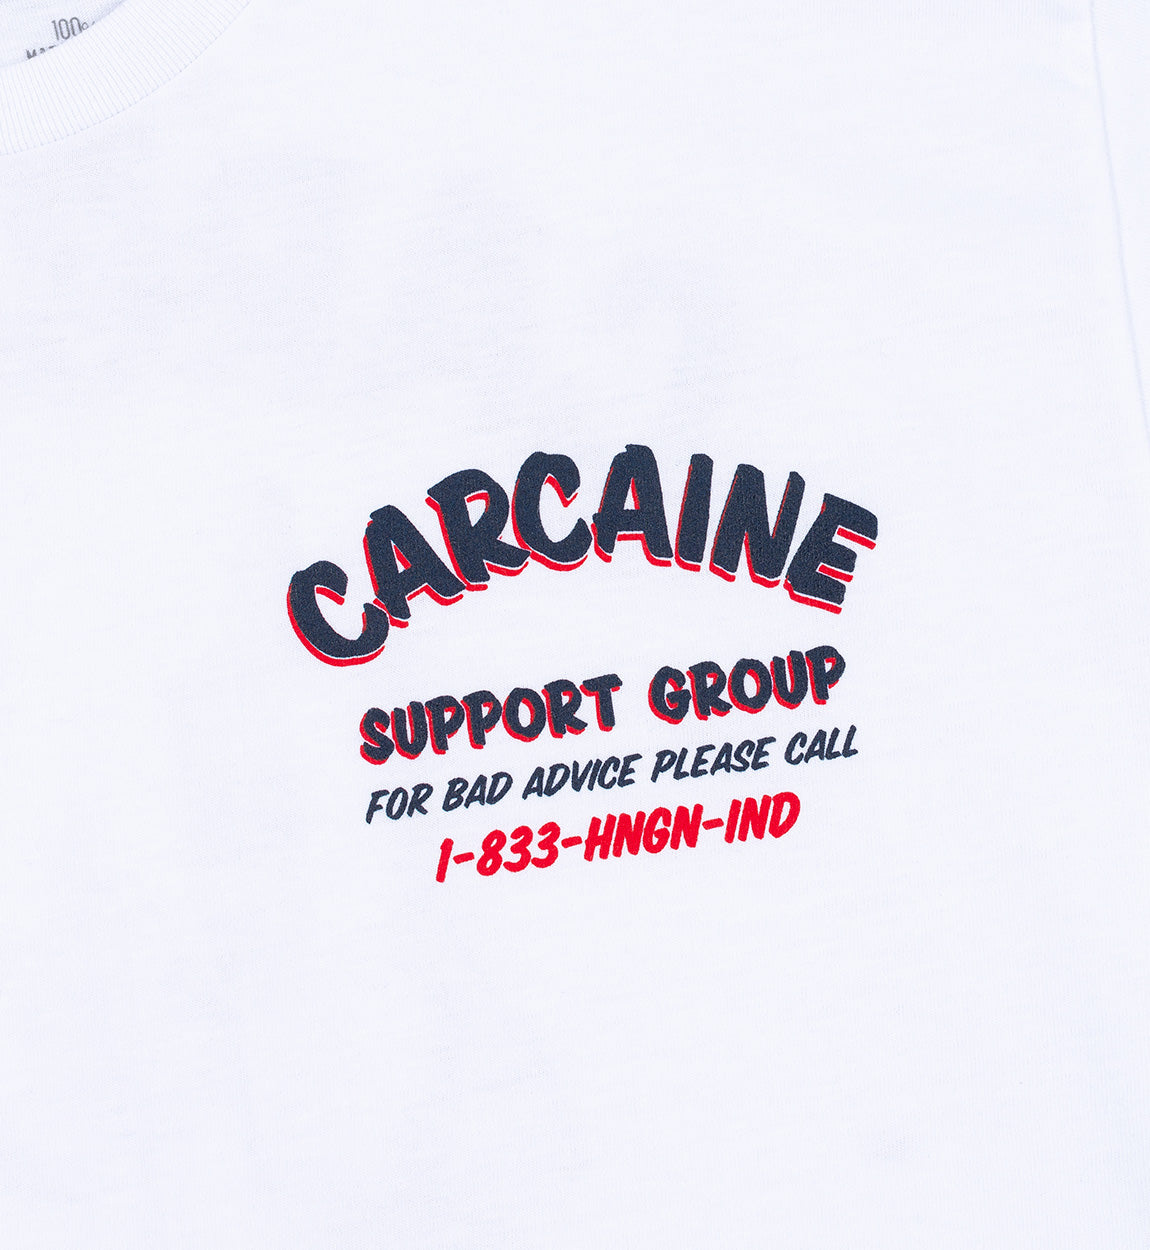 Hoonigan CARCAINE SUPPORT GROUP Short Sleeve Tee